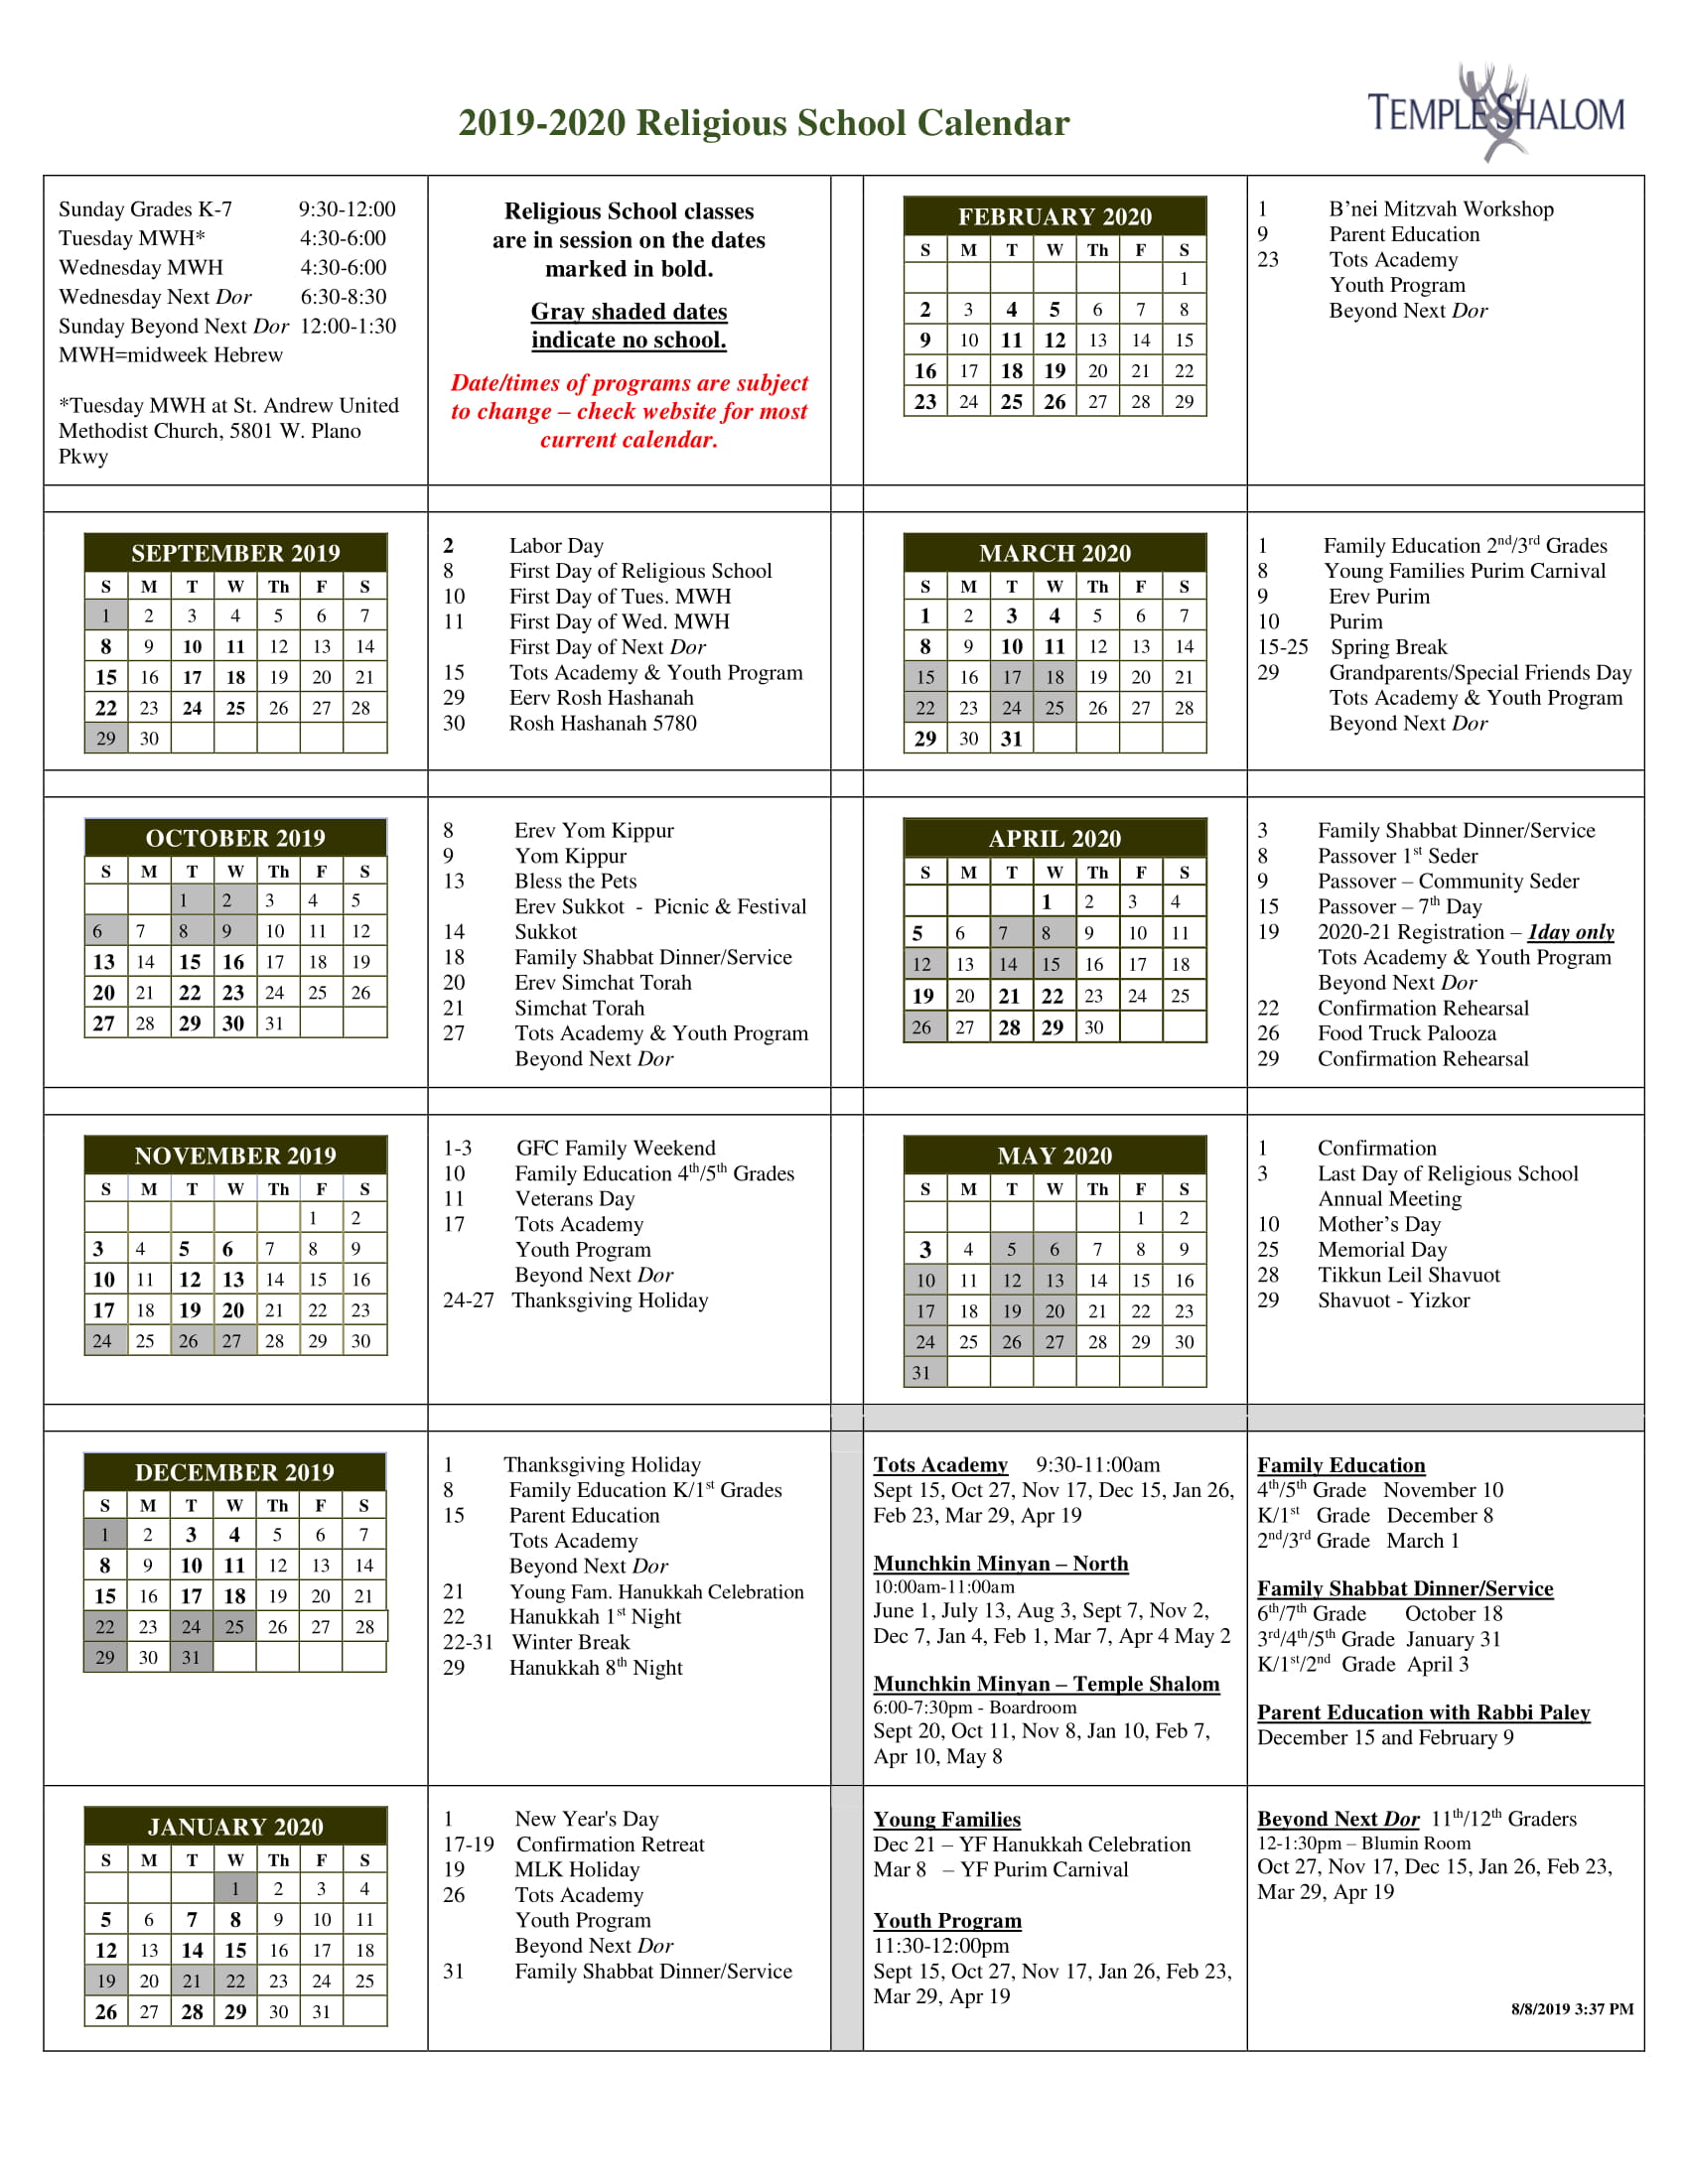 religious-school-calendar-temple-shalom-dallas